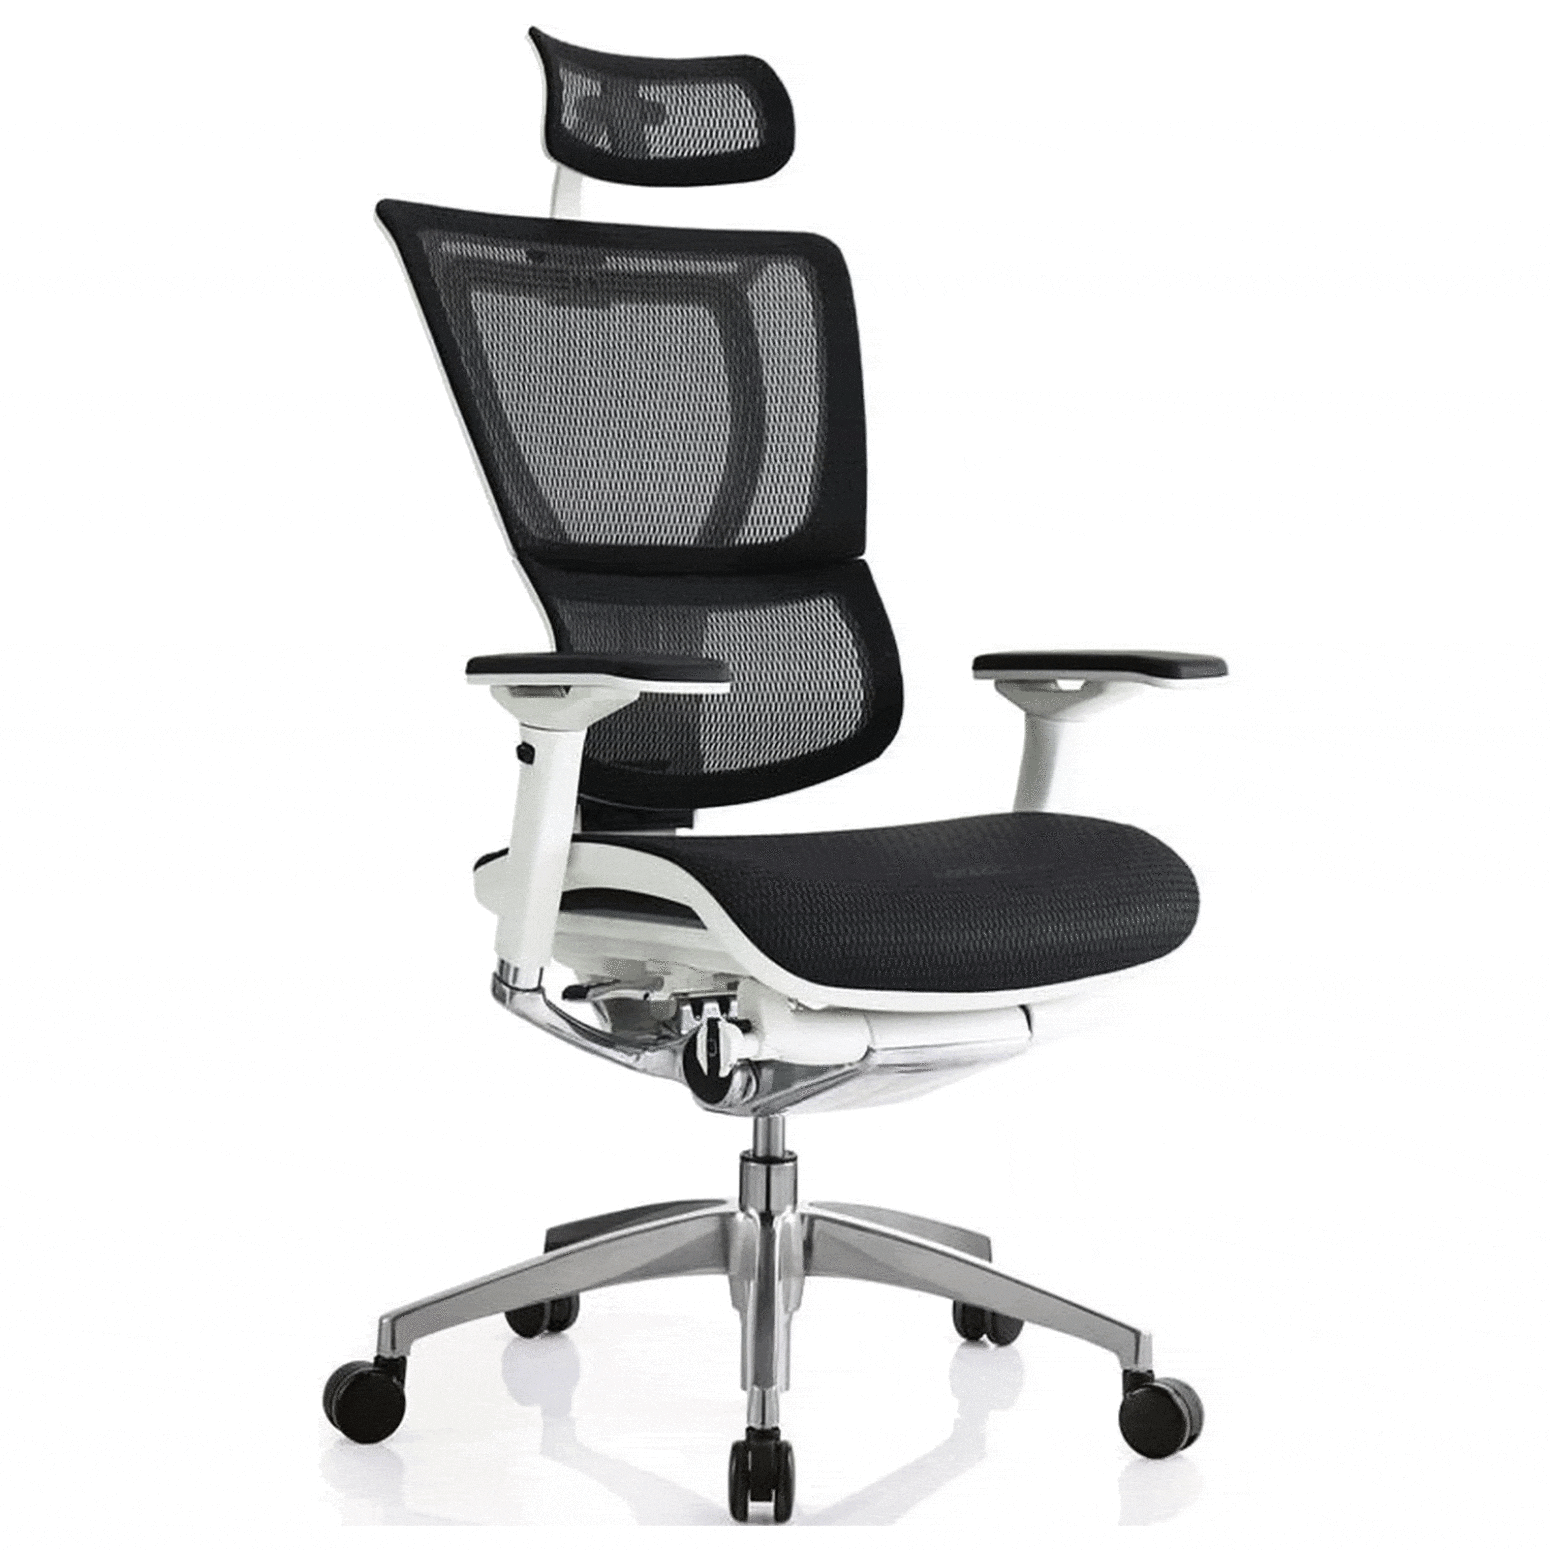 Eurotech ioo ergonomic executive chair with headrest